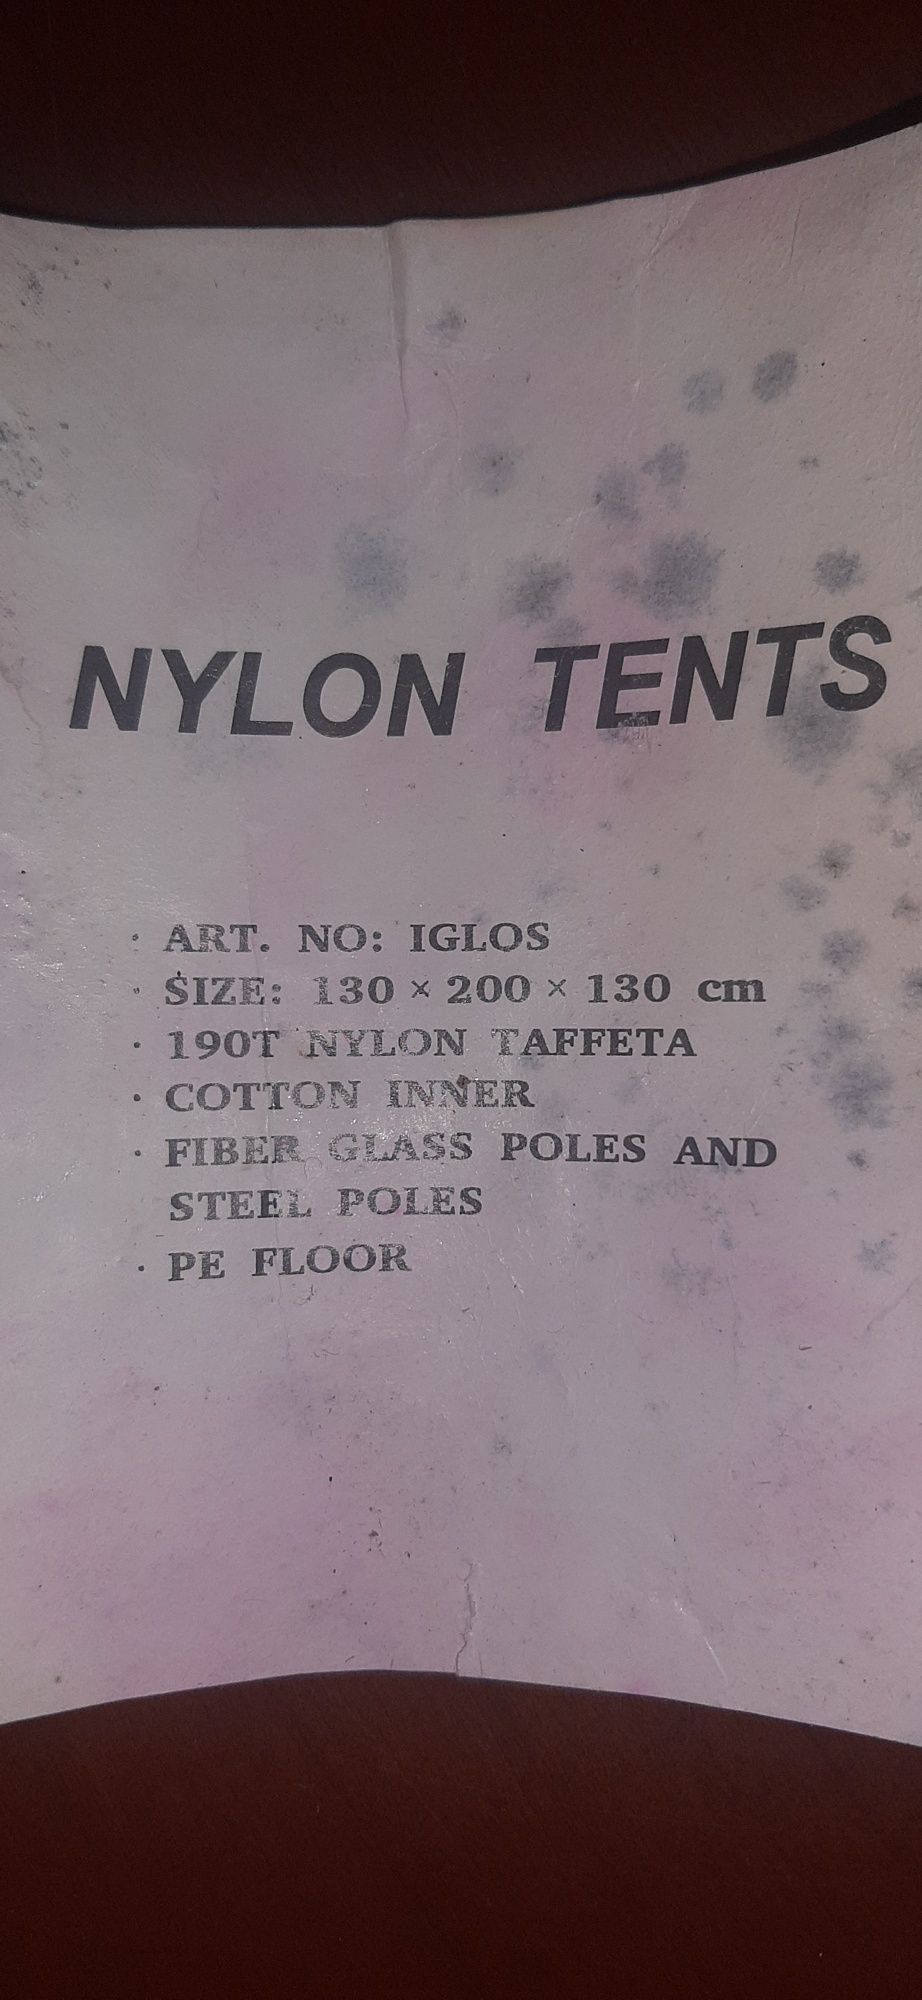 Nylon tents 4 pessoas